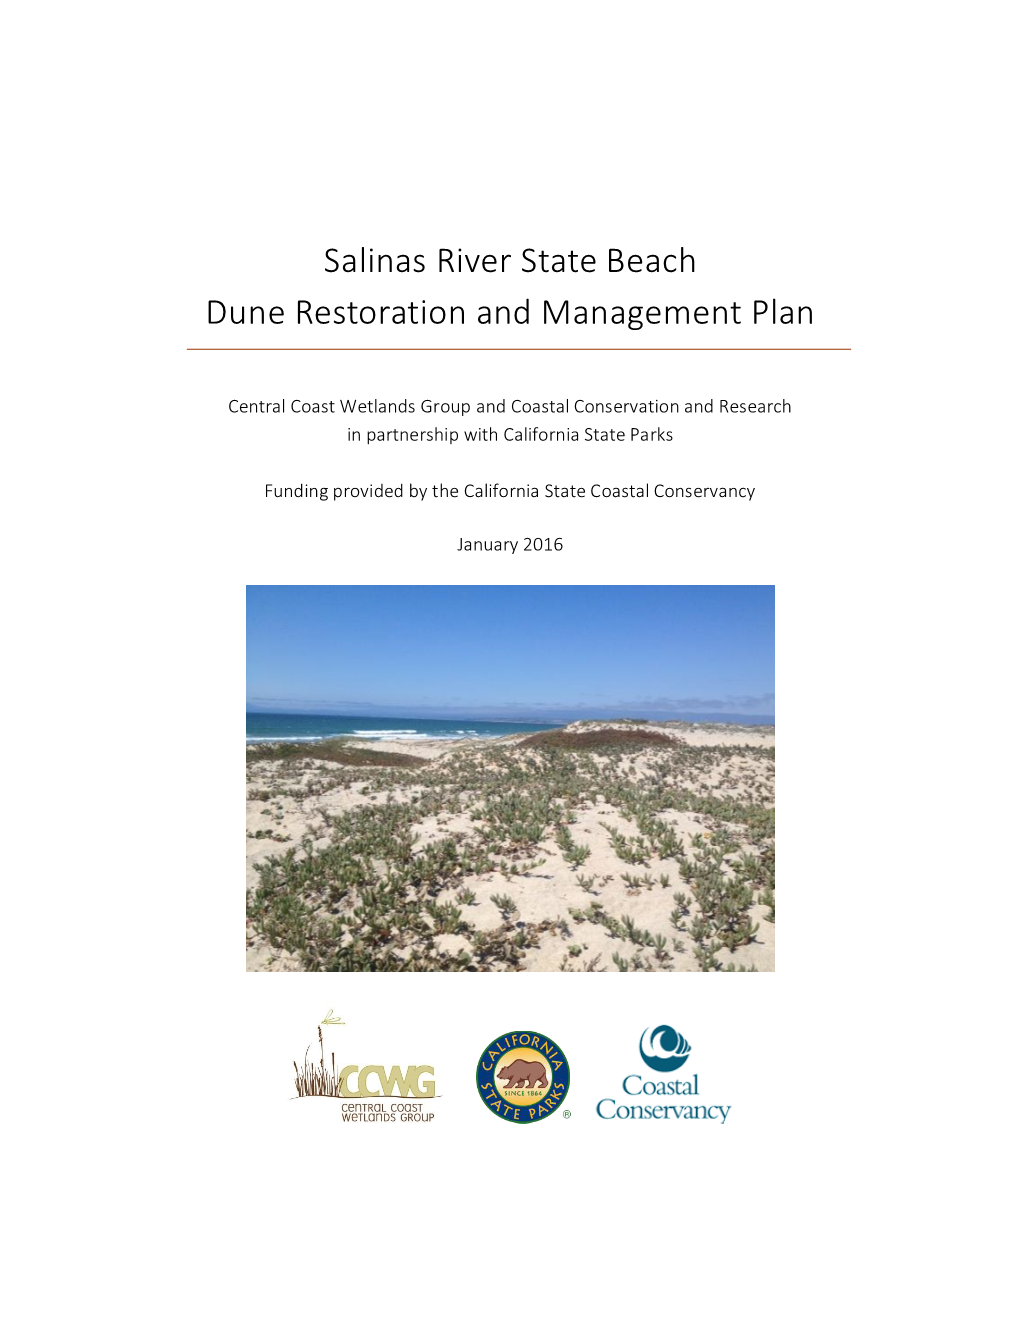 Salinas River State Beach Dune Restoration and Management Plan